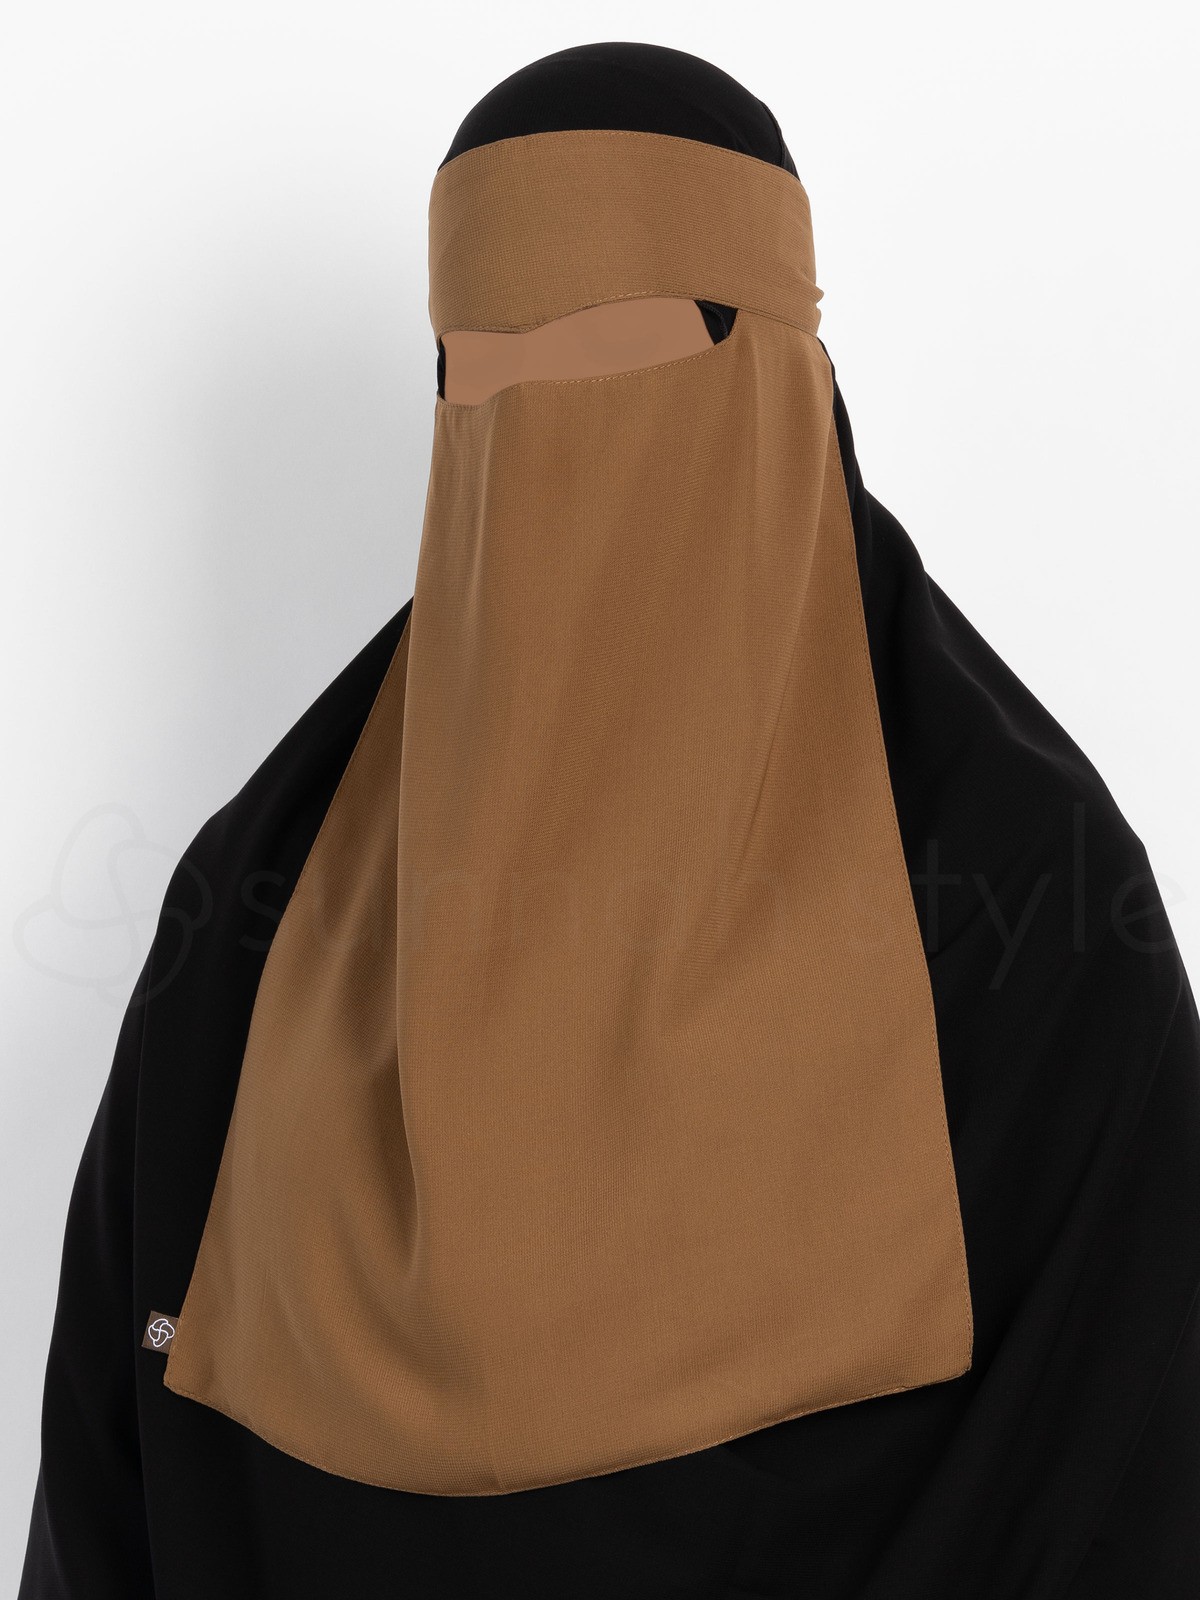 Sunnah Style - One Layer Widow's Peak Niqab (Caramel)